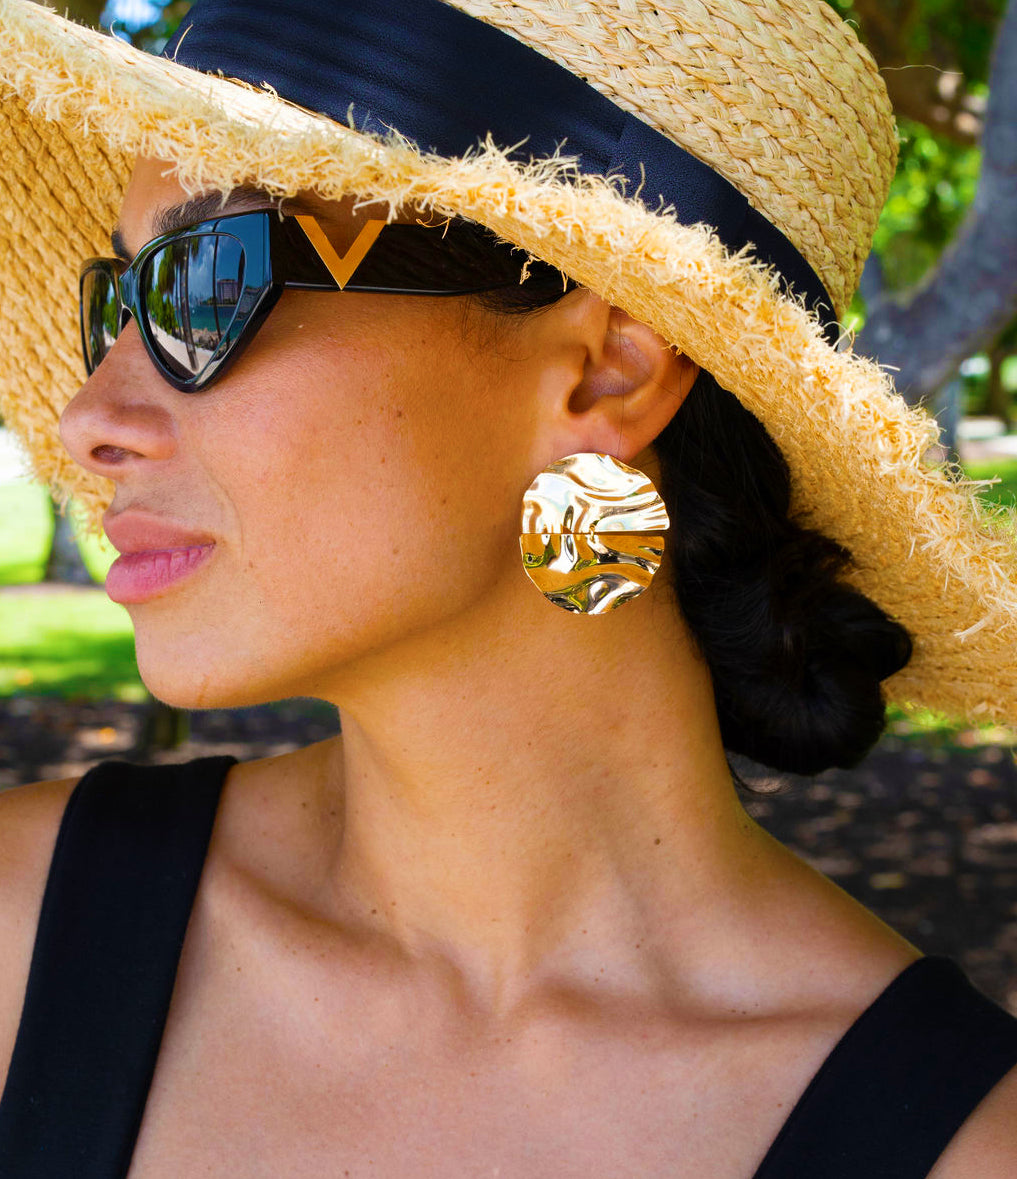 18K Gold Filled Square Octagonal Minimalist Stud Earrings (J290)